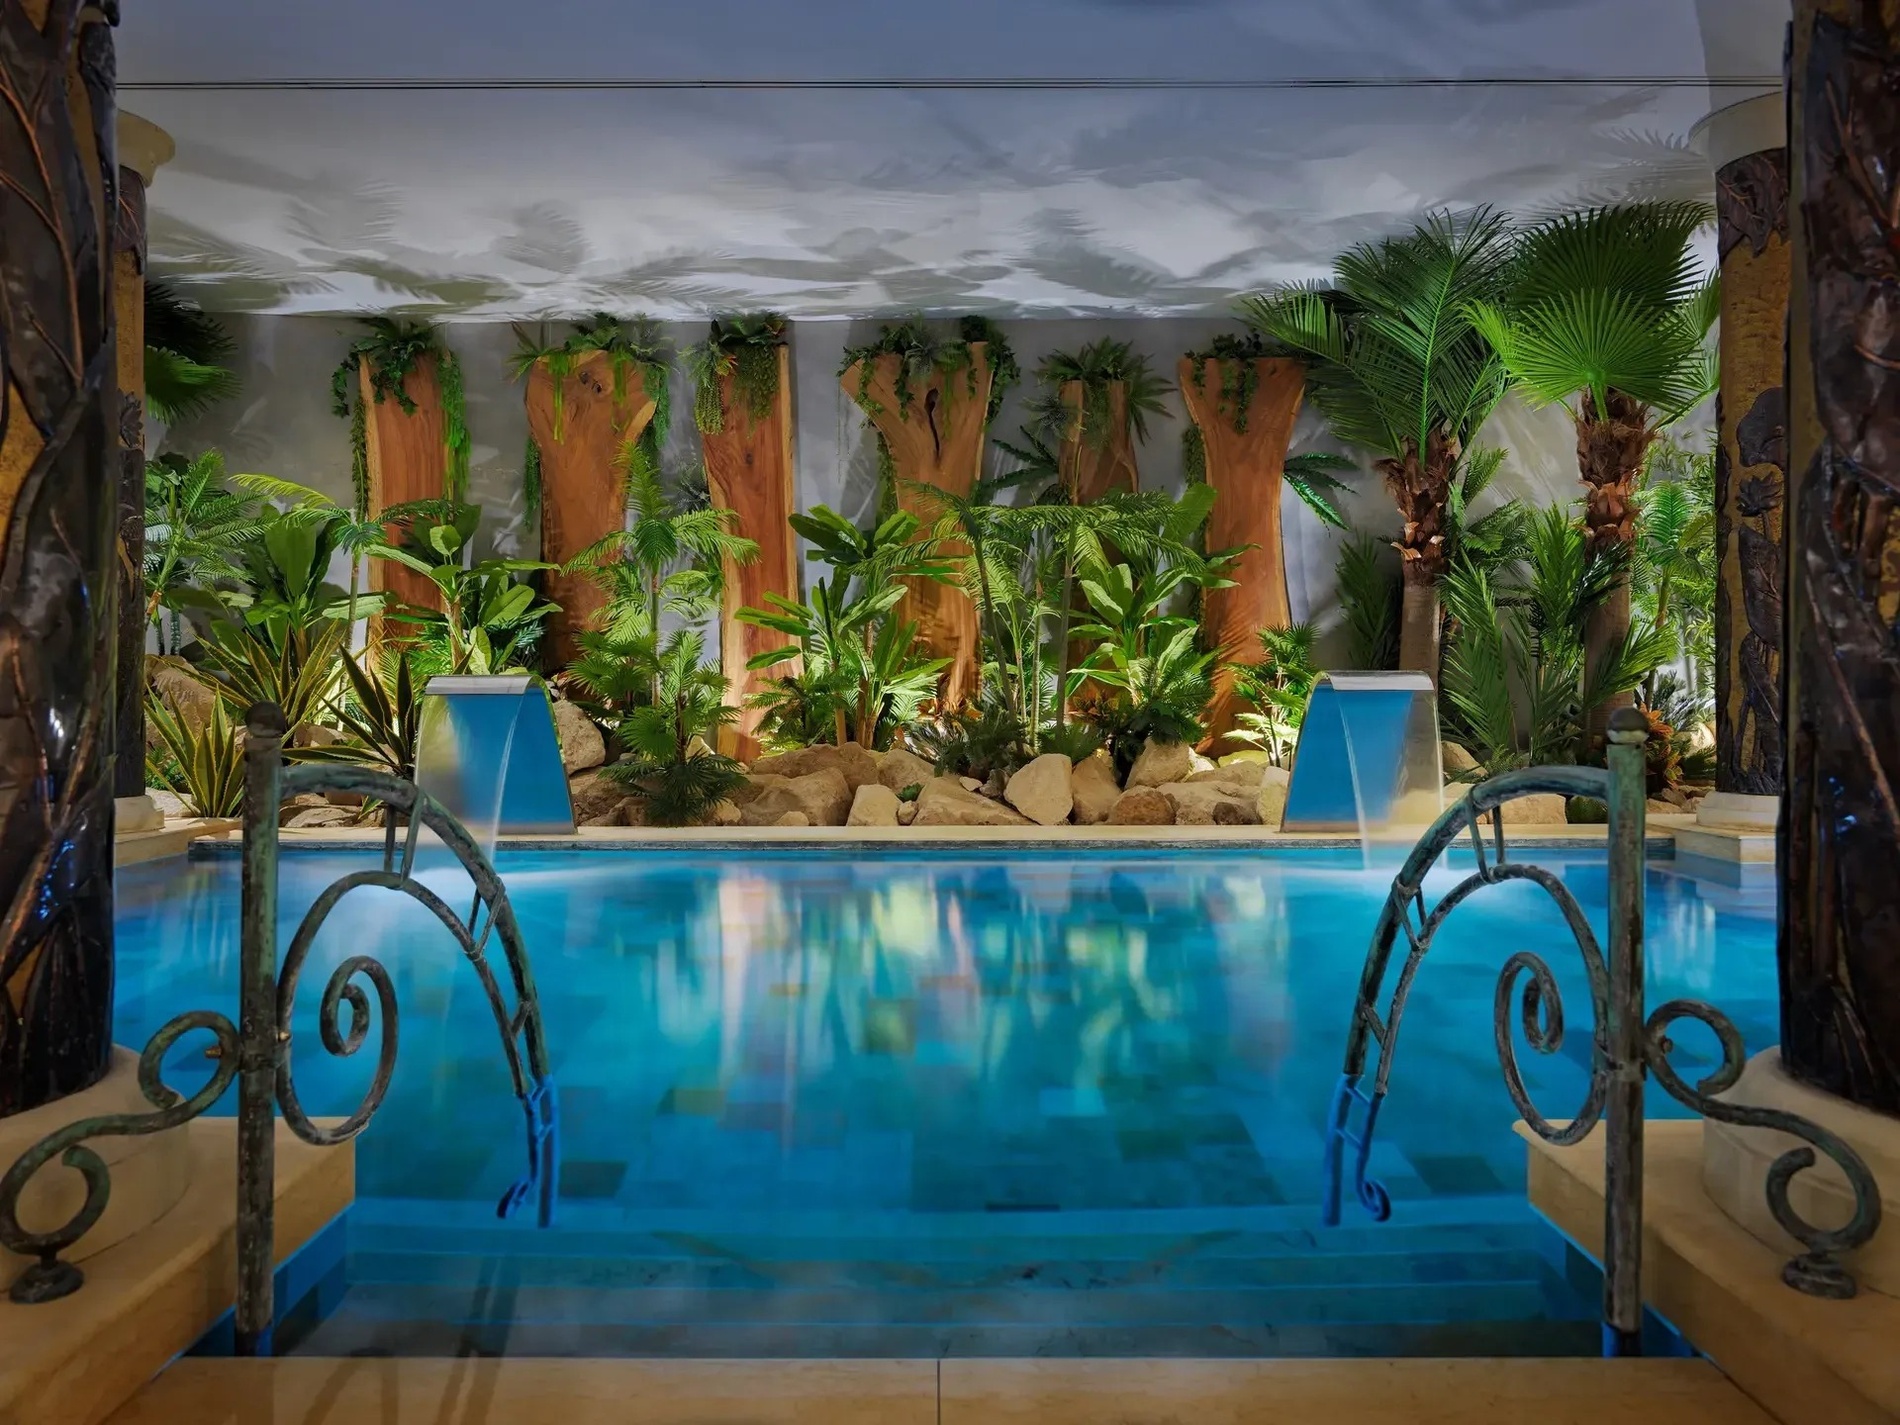 Royal River Luxury Hotel Tenerife - Serenity Spa